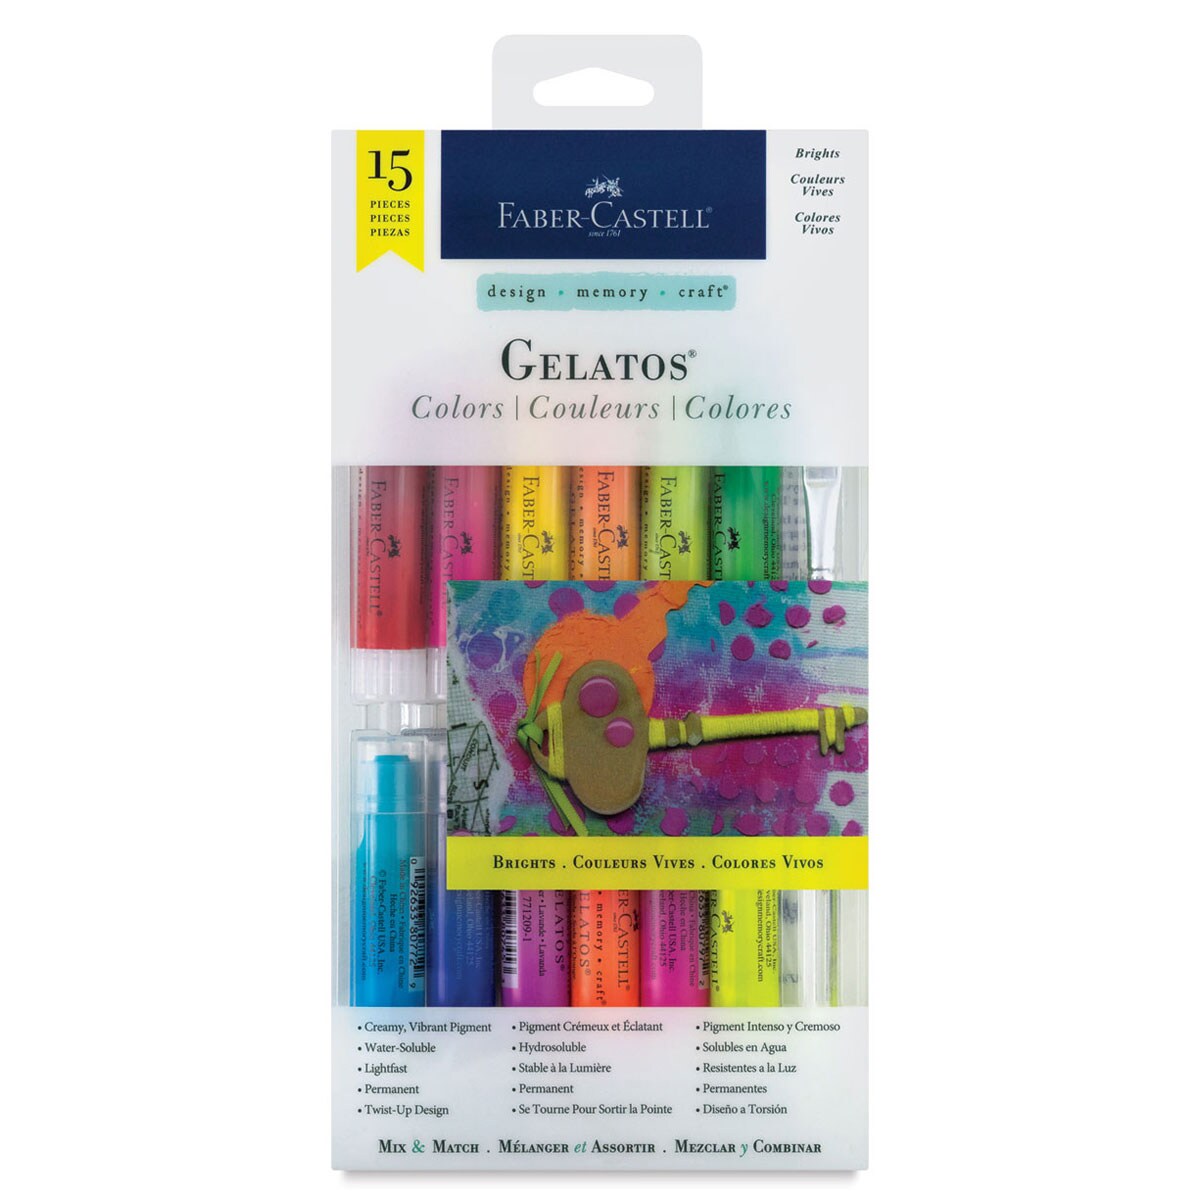 Faber-Castell Gelatos Sets - Assorted Bright Colors, Set of 15